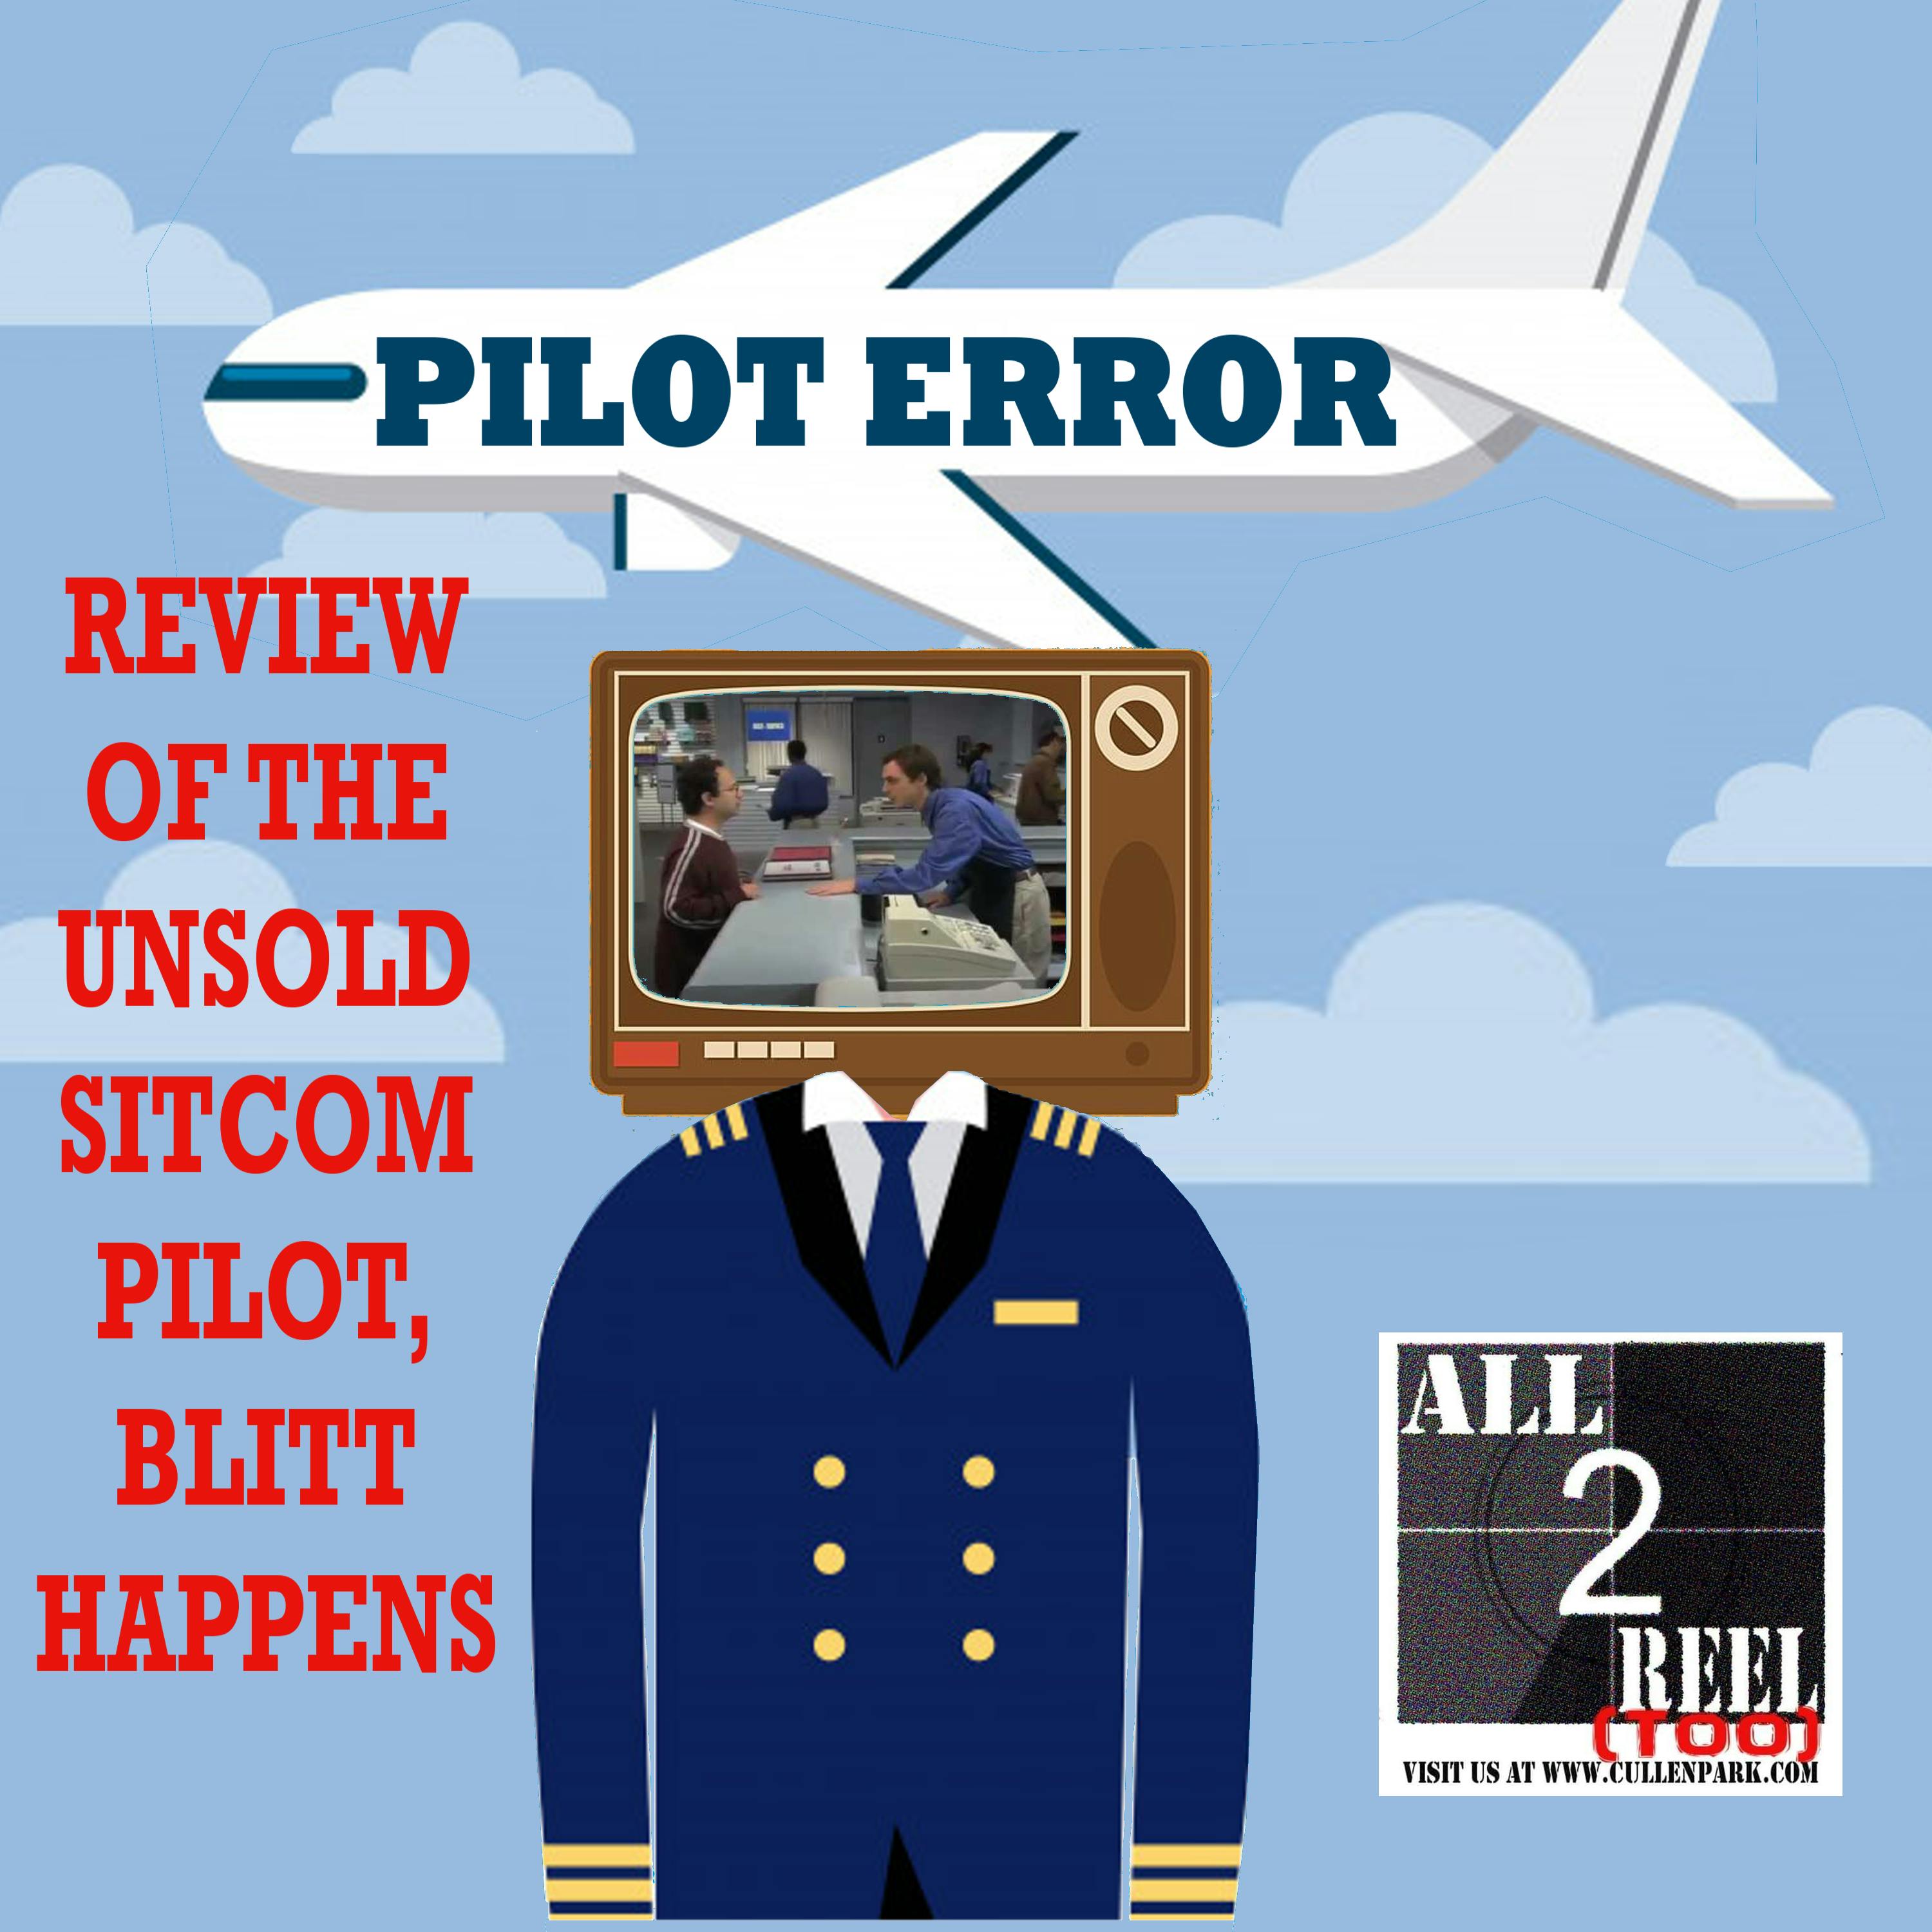 Blitt Happens (2003) - PILOT ERROR TV REVIEW Image